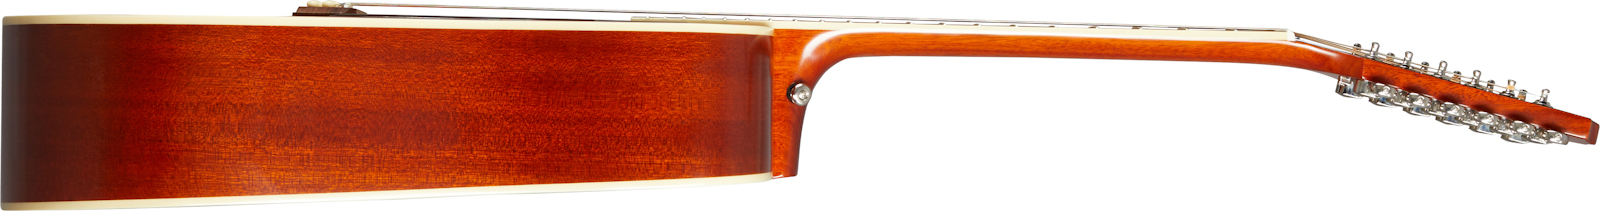 Epiphone Hummingbird 12-string Inspired By Gibson Dreadnought 12c Epicea Acajou Lau - Aged Cherry Sunburst - Elektroakustische Gitarre - Variation 2